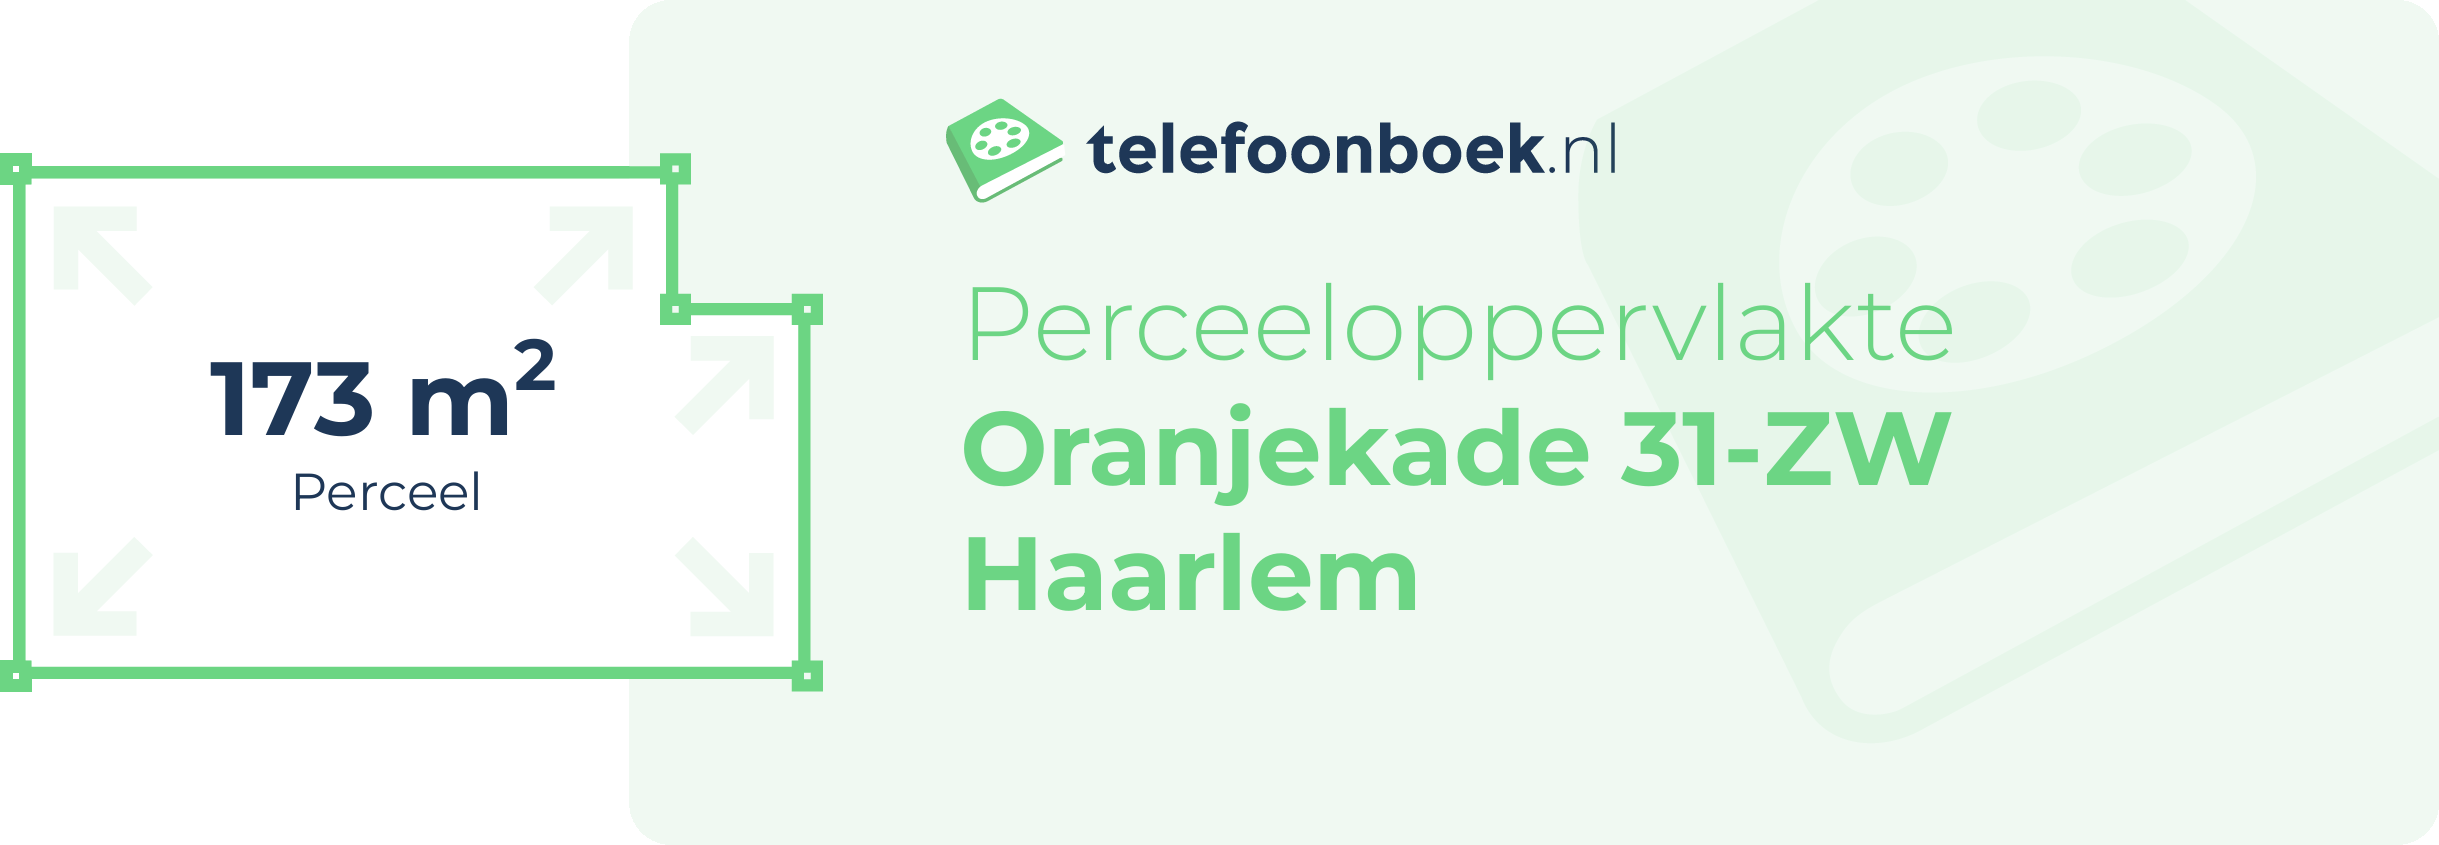 Perceeloppervlakte Oranjekade 31-ZW Haarlem